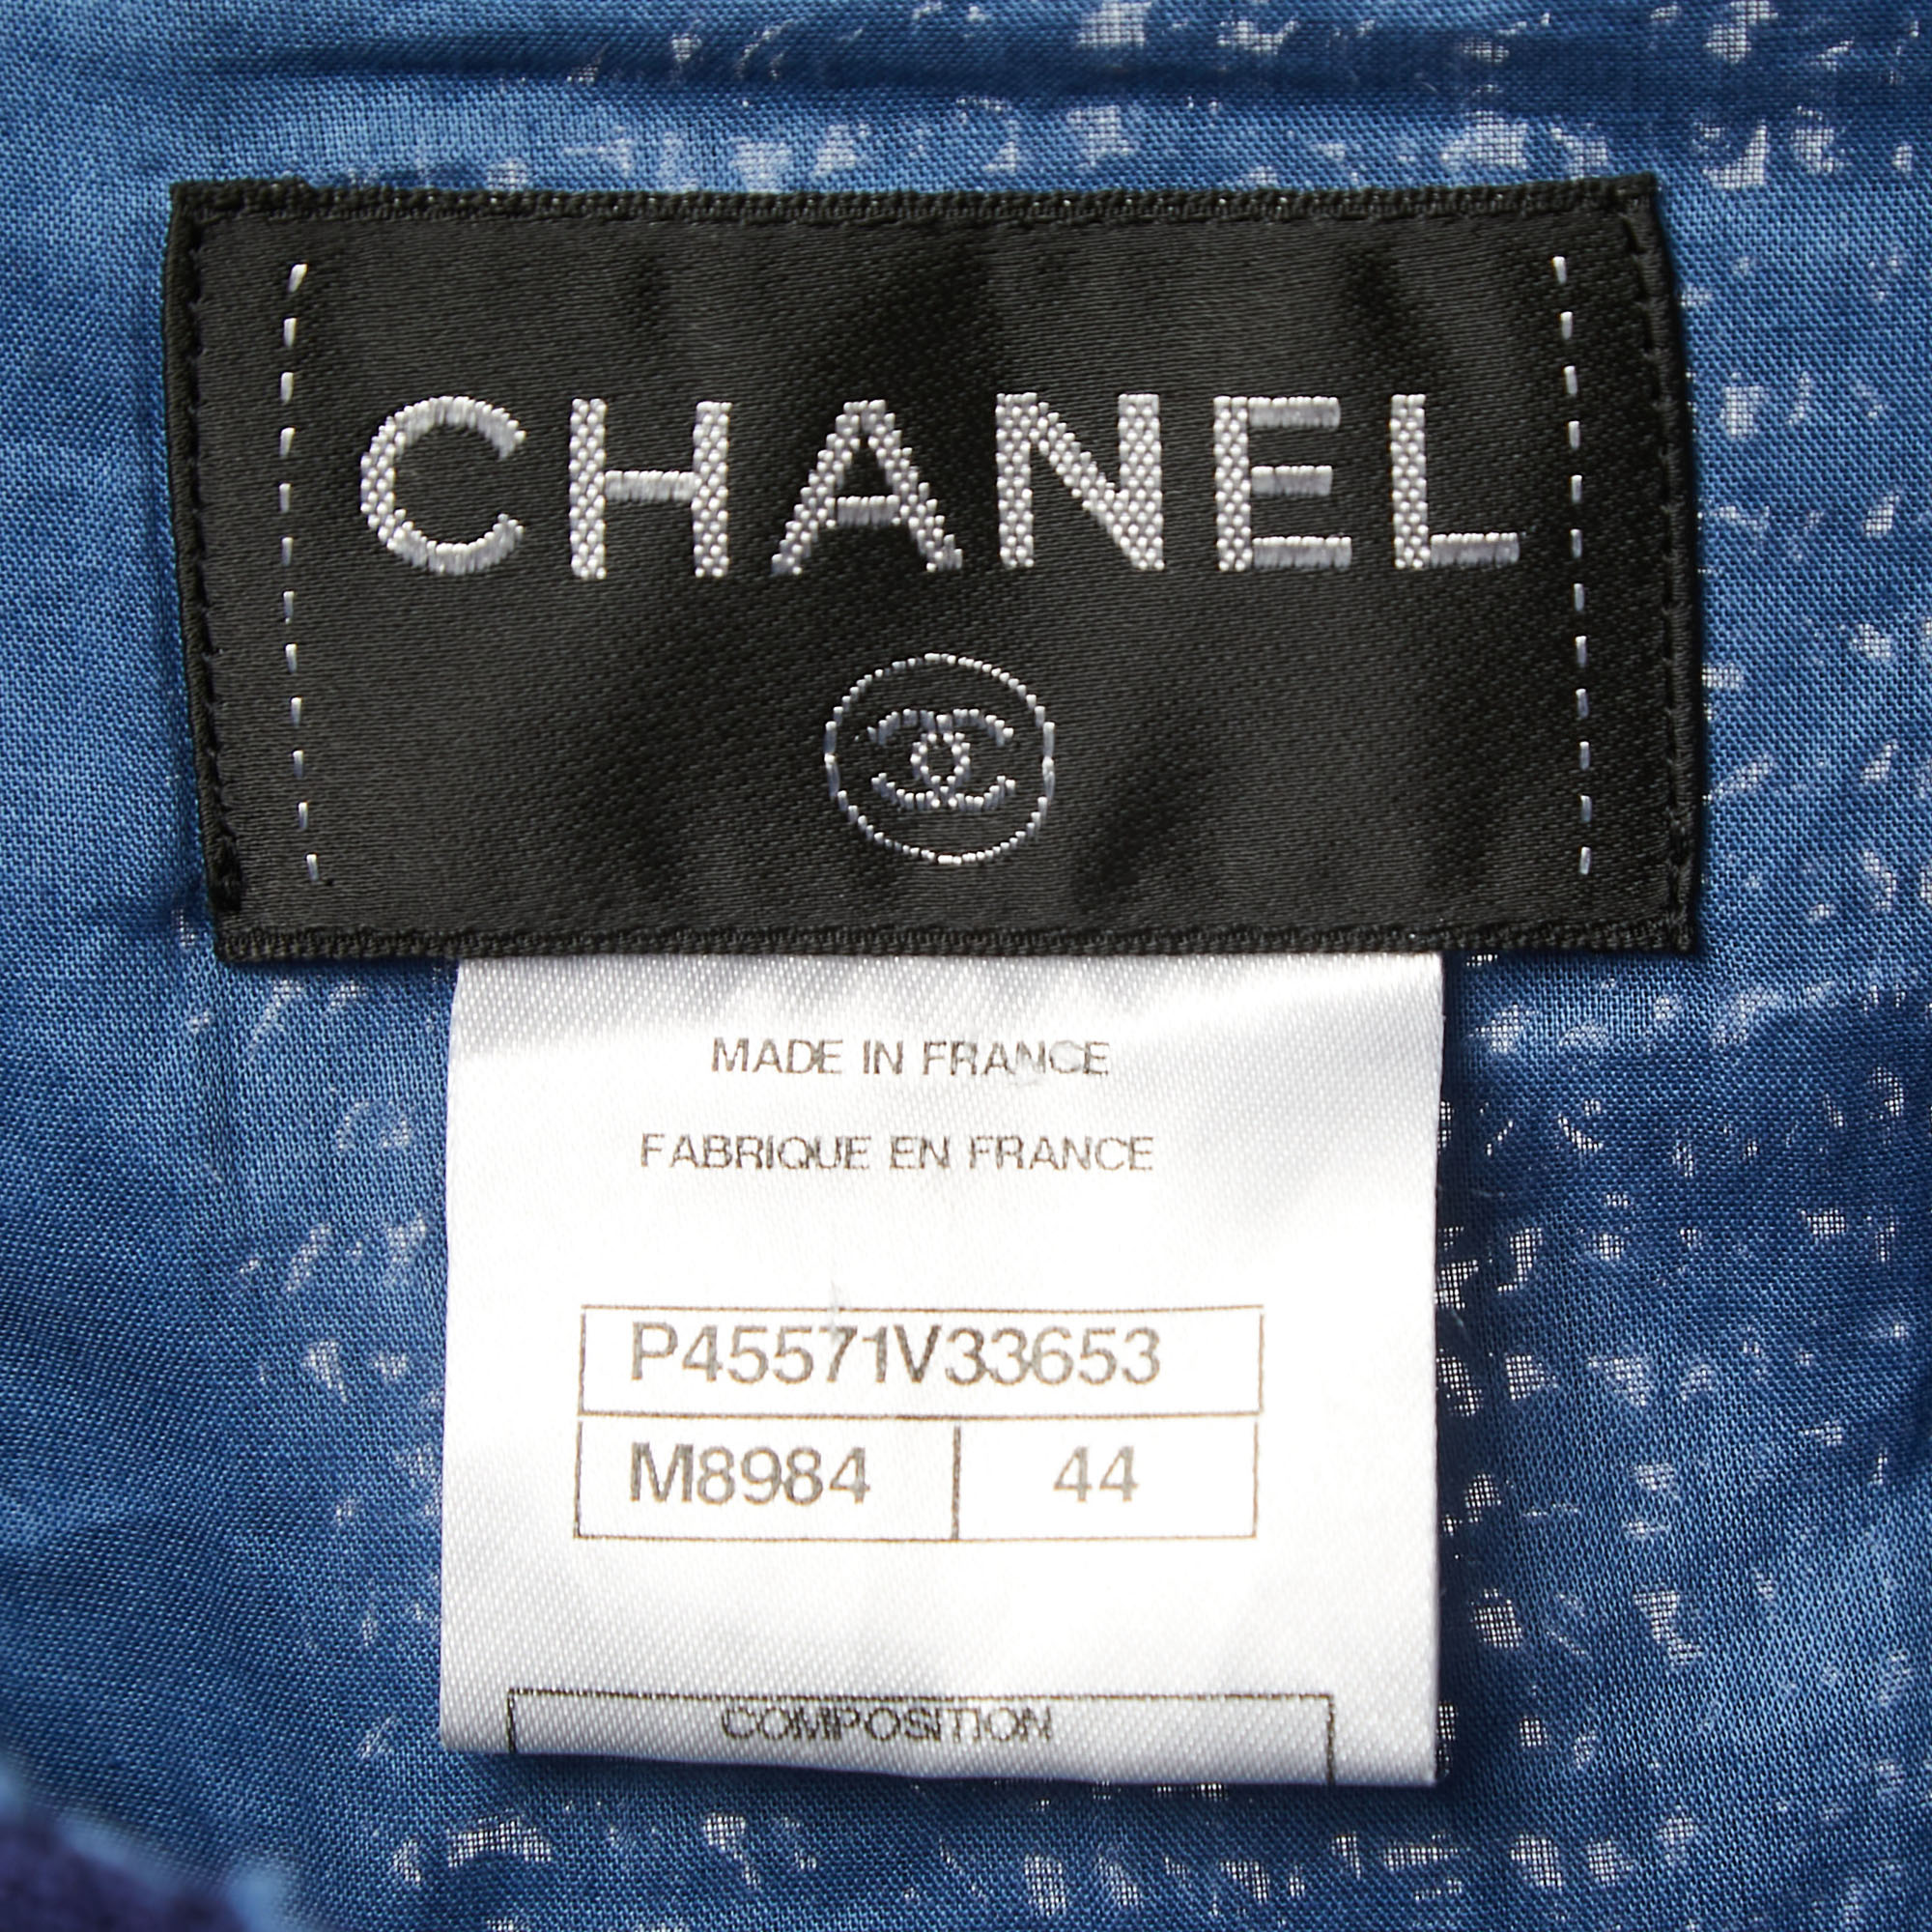 Chanel Blue Tweed A-Line Short Dress L